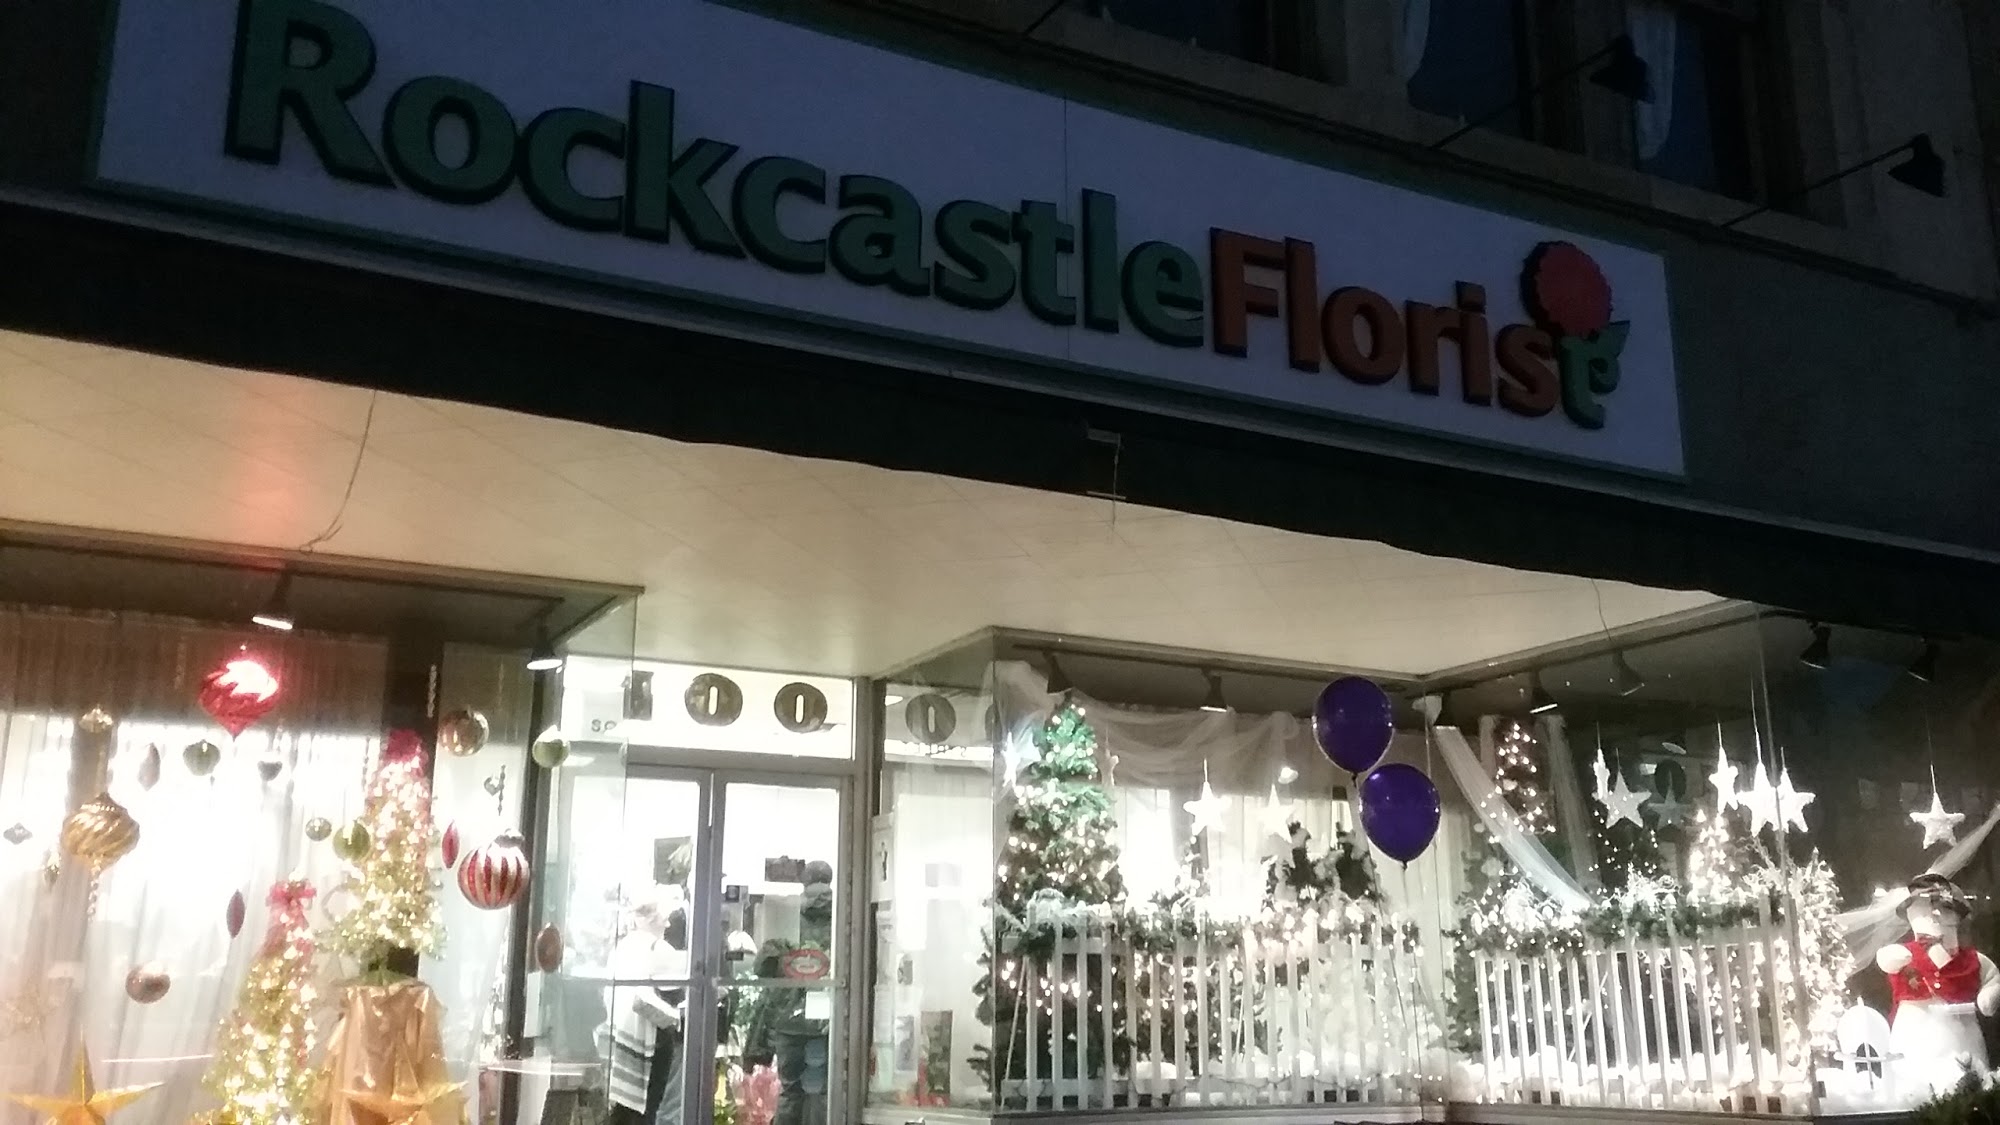 Rockcastle Florist - Canandaigua